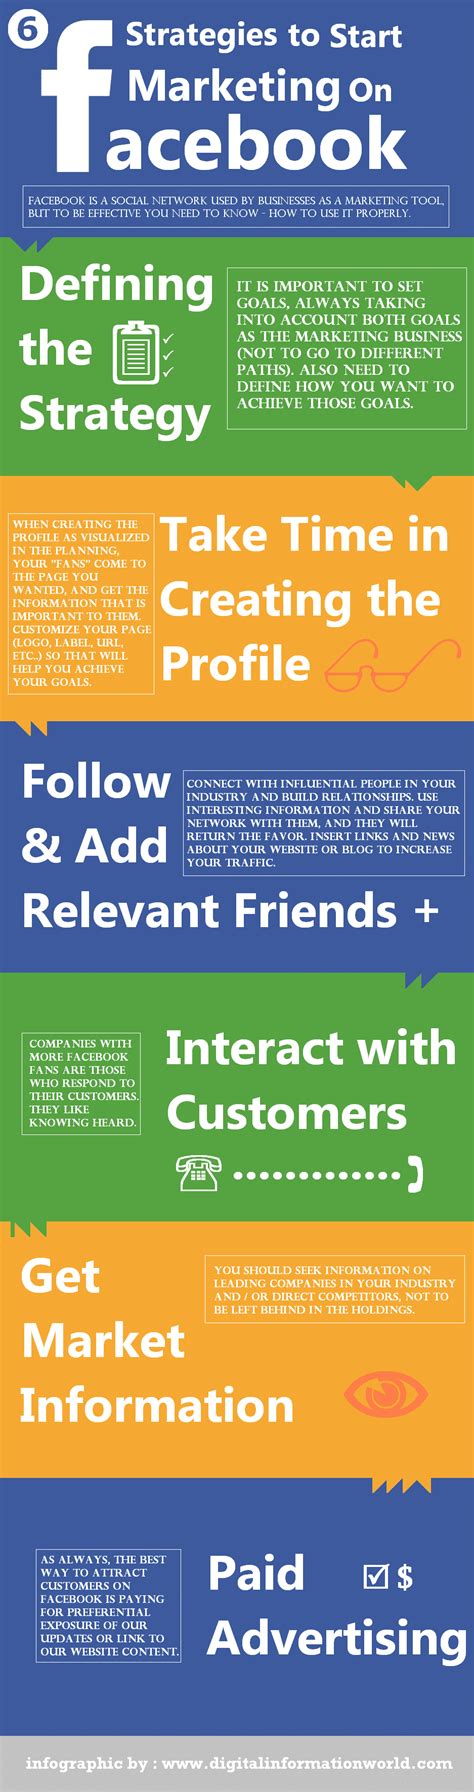 6 Fundamental Facebook Marketing Strategies [Infographic] | Bit Rebels